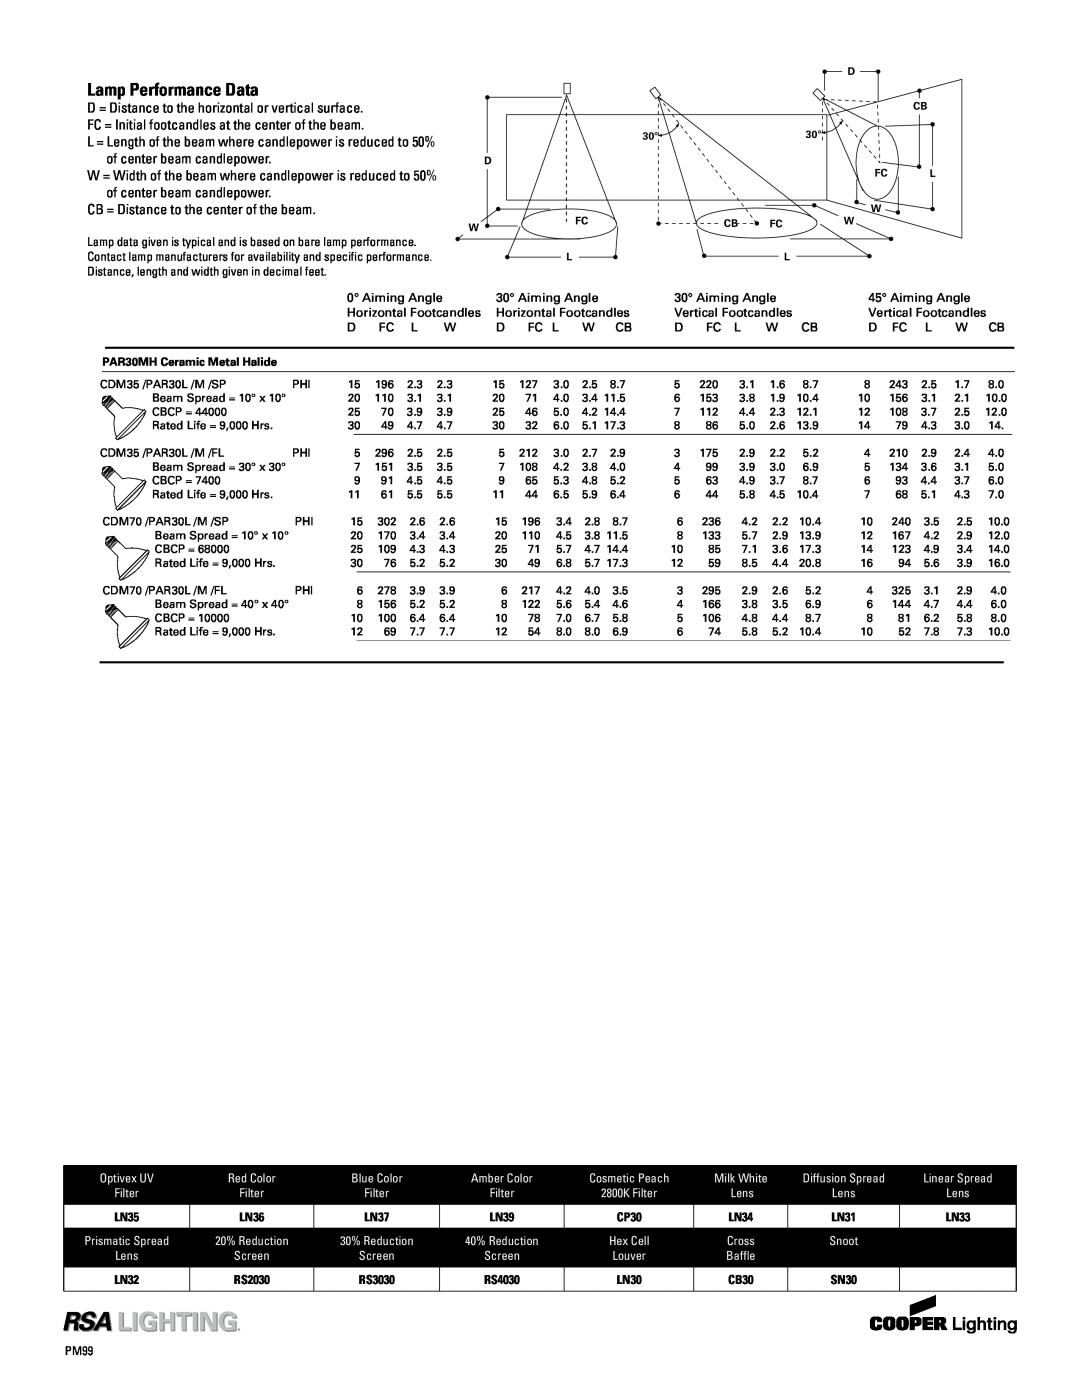 Cooper Lighting PM133ob, PM633ob, PM433ob, PM233ob specifications Lamp Performance Data 